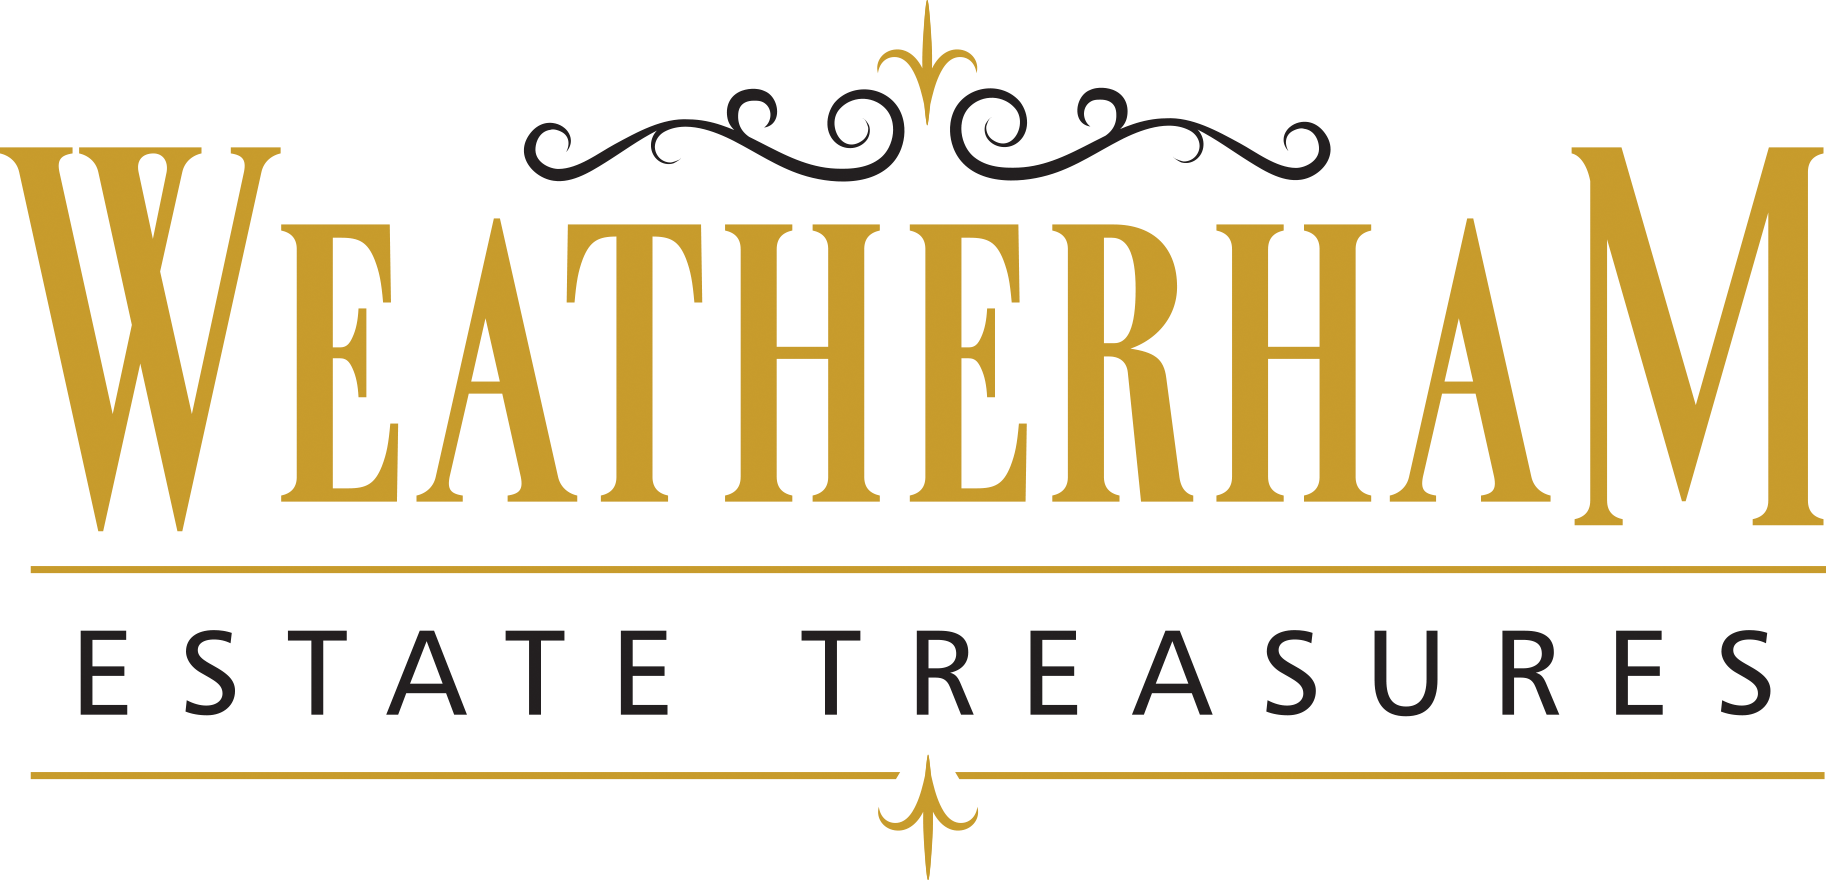 Weatherham Estate Treasures